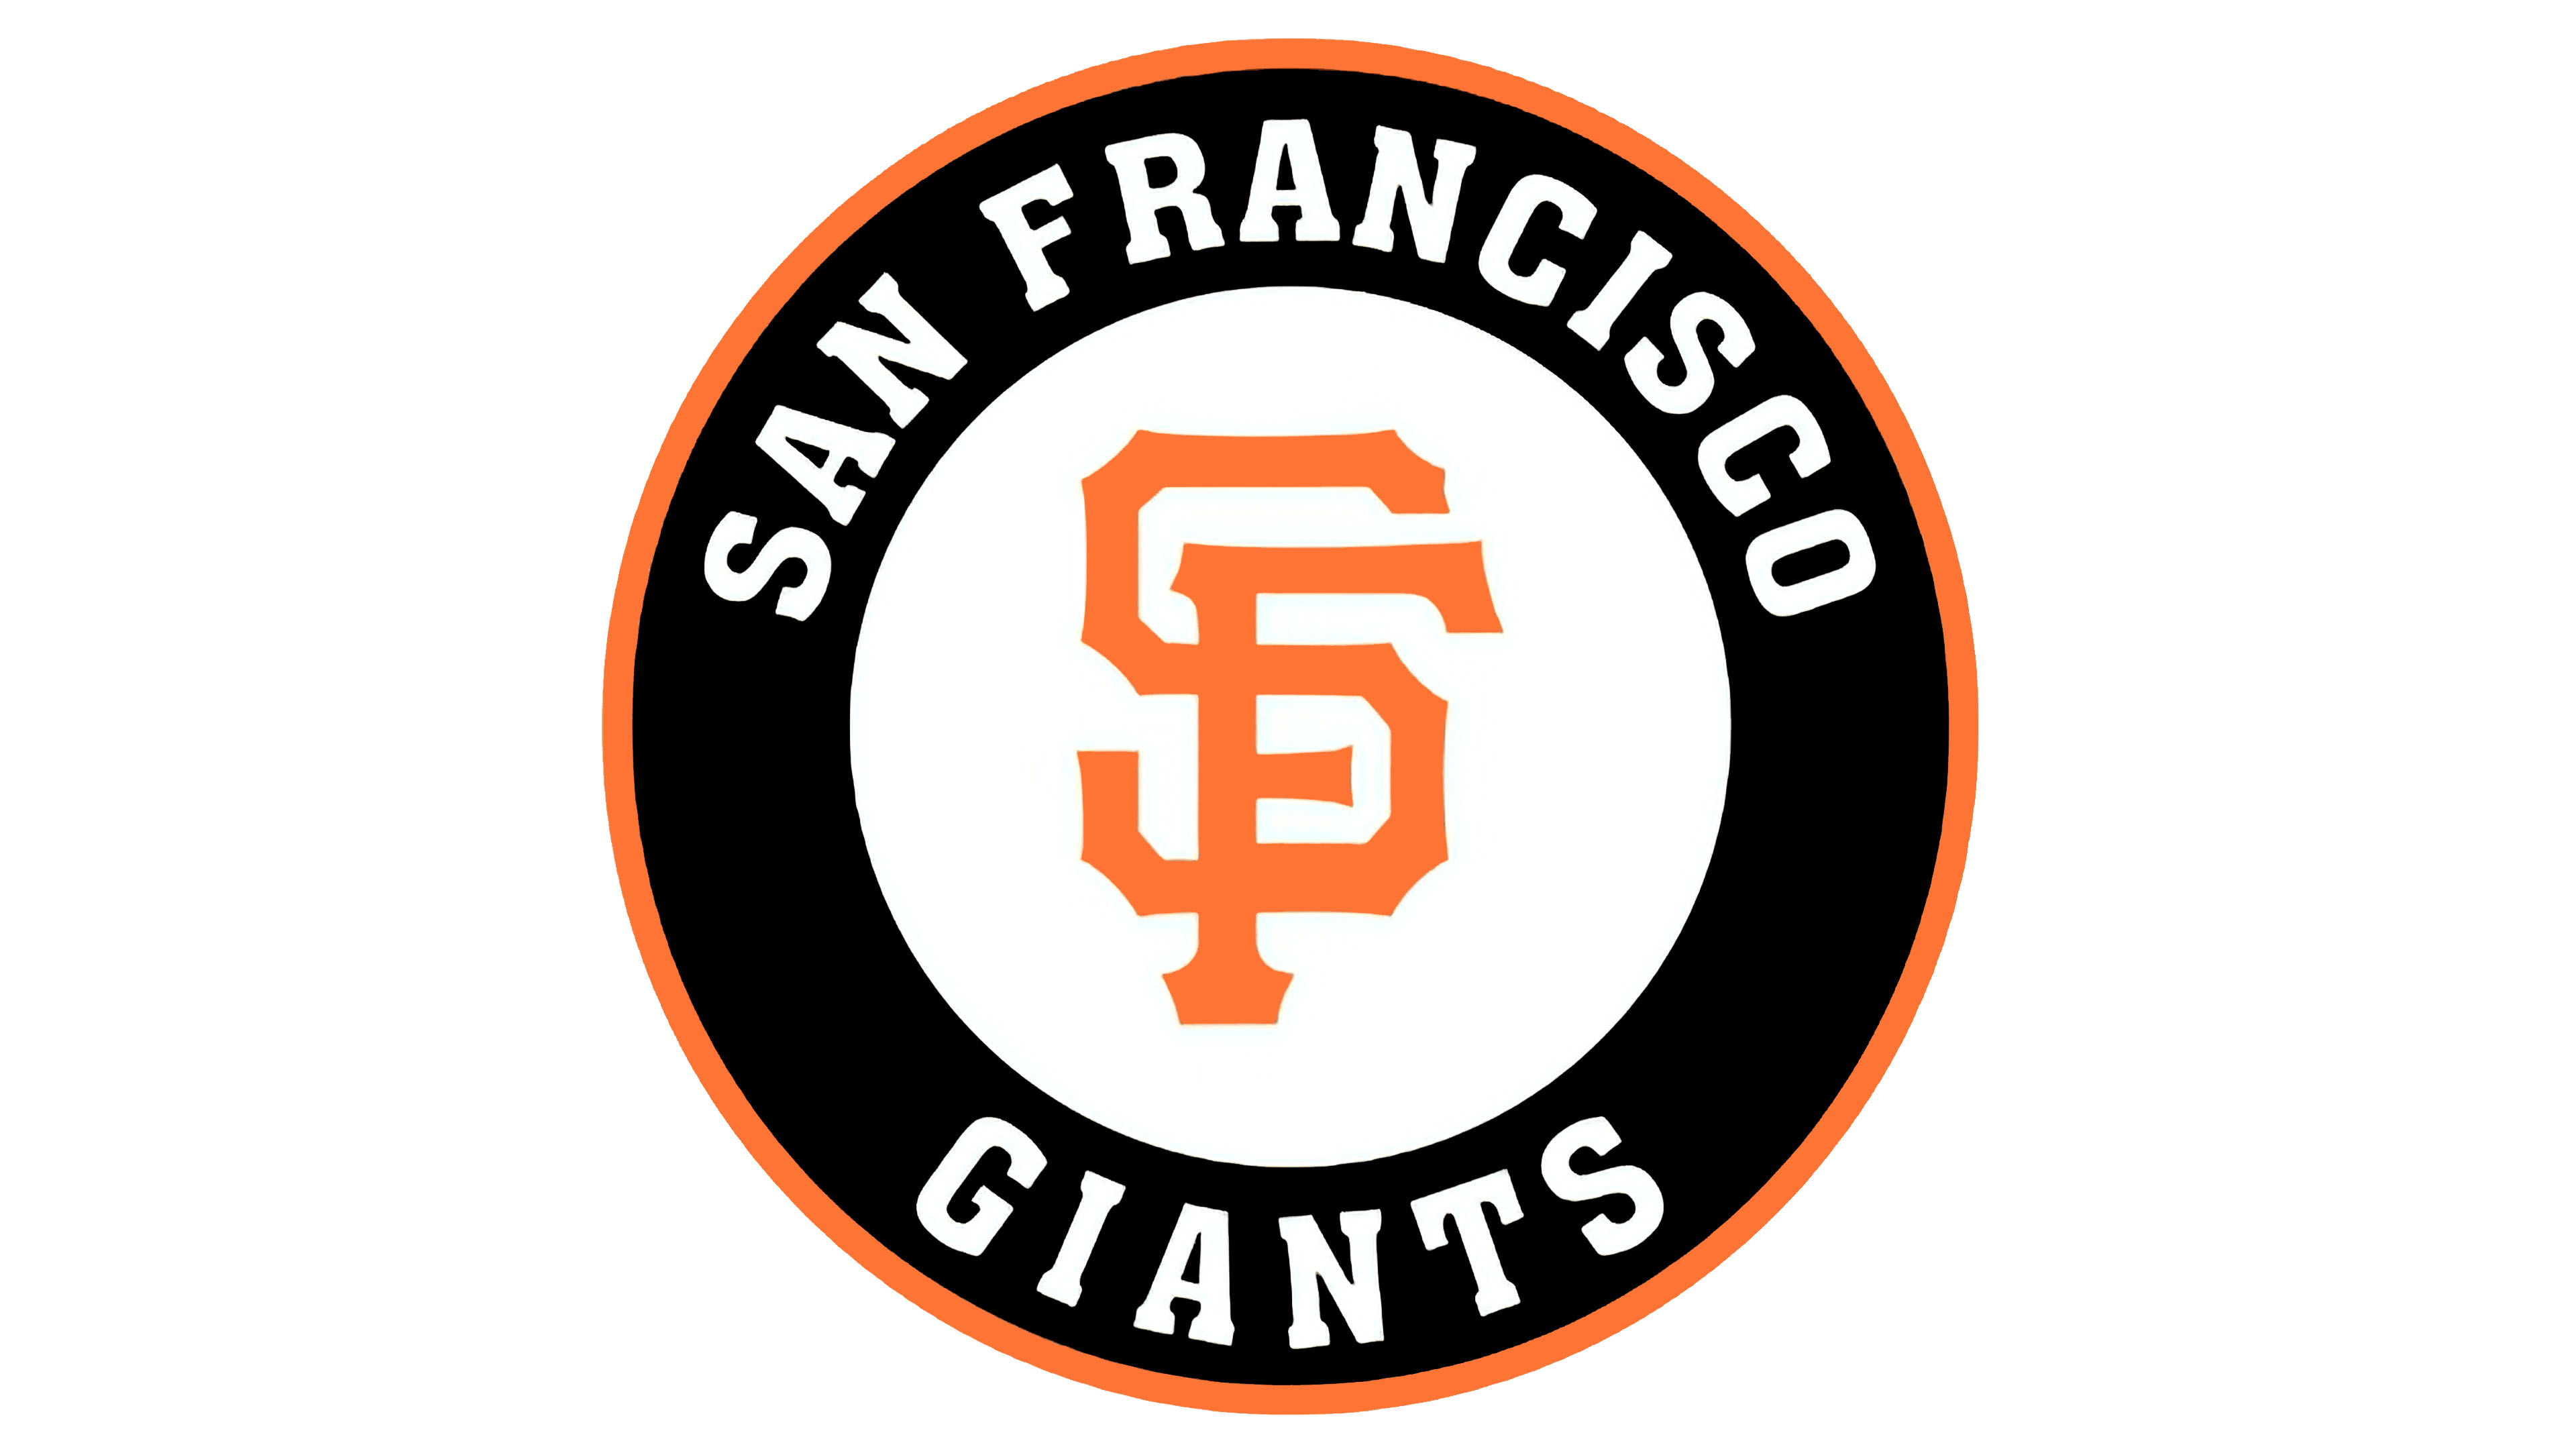 San Francisco Giants Logo : histoire, signification de l'emb